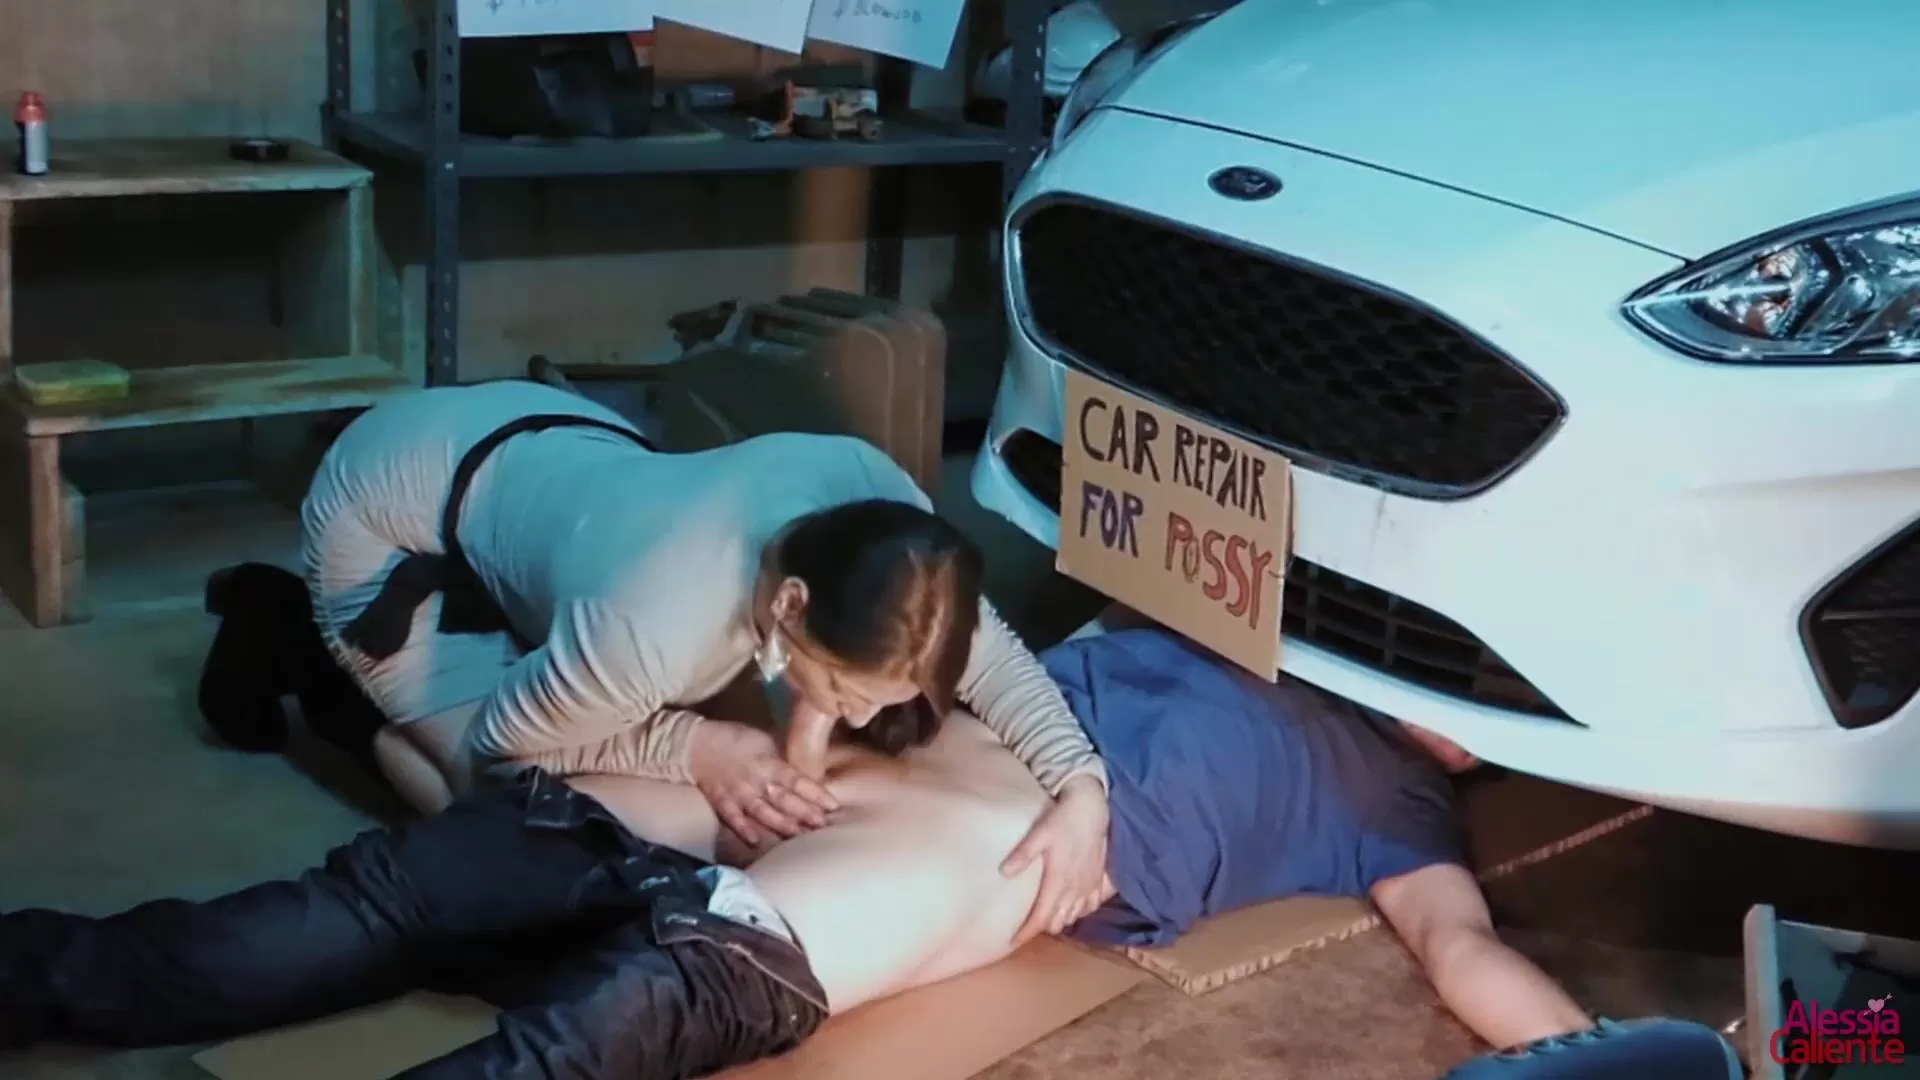 Full Hd Brazzers Car Mechanic Porn Sex - Slutty Customer Bangs Her Mechanic - Car Repair for Pussy - Alessia  Caliente watch online